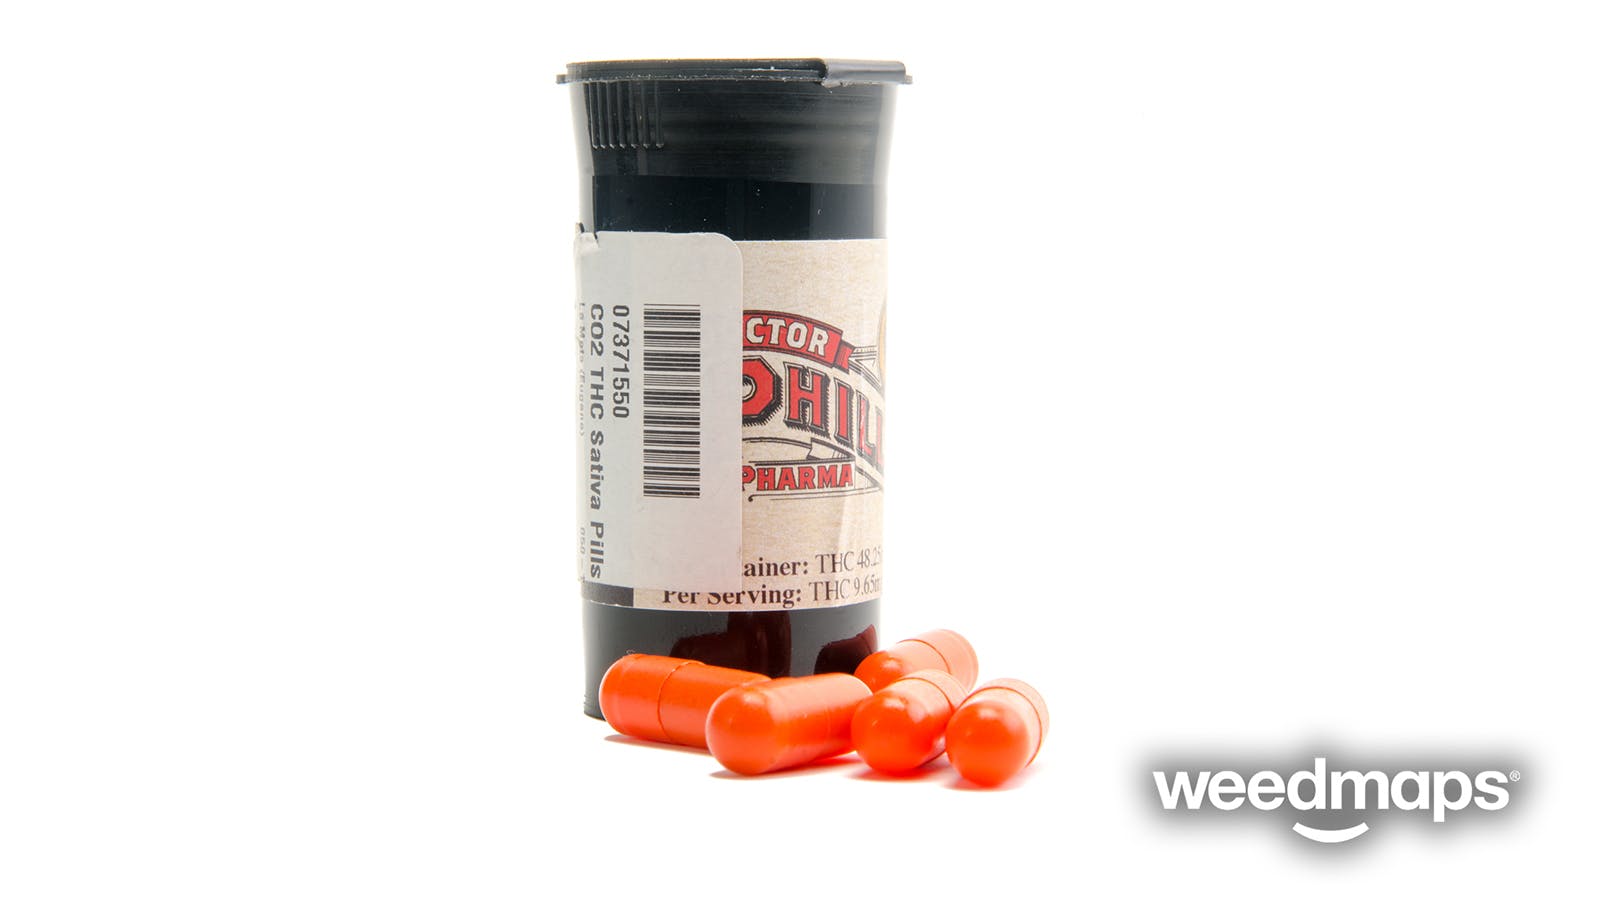 marijuana-dispensaries-1291-west-7th-ave-eugene-doctor-phills-pharma-sativa-2b-ginger-tumeric-5pk